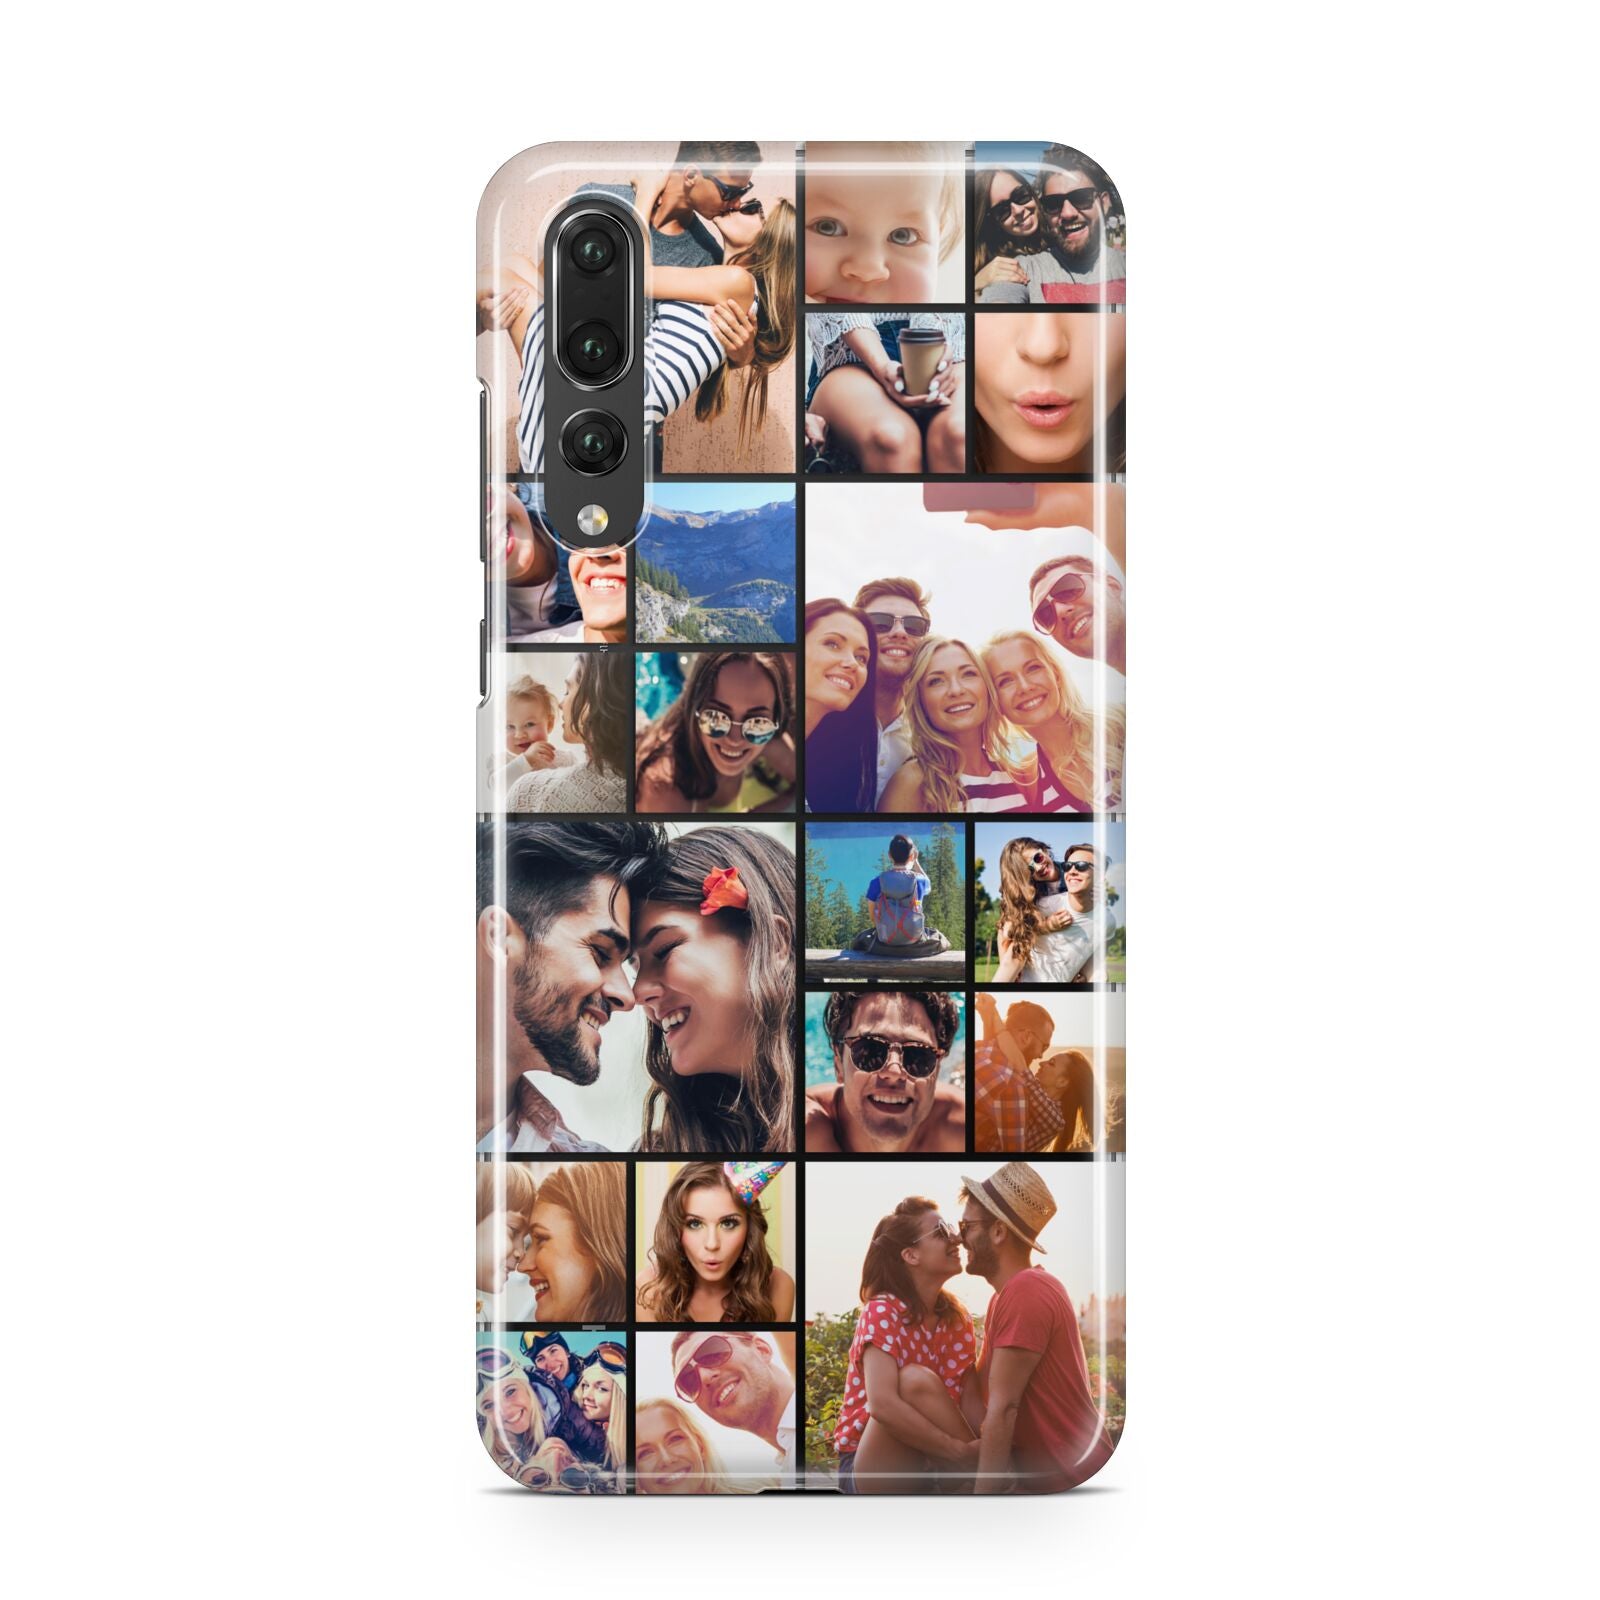 Photo Grid Huawei P20 Pro Phone Case